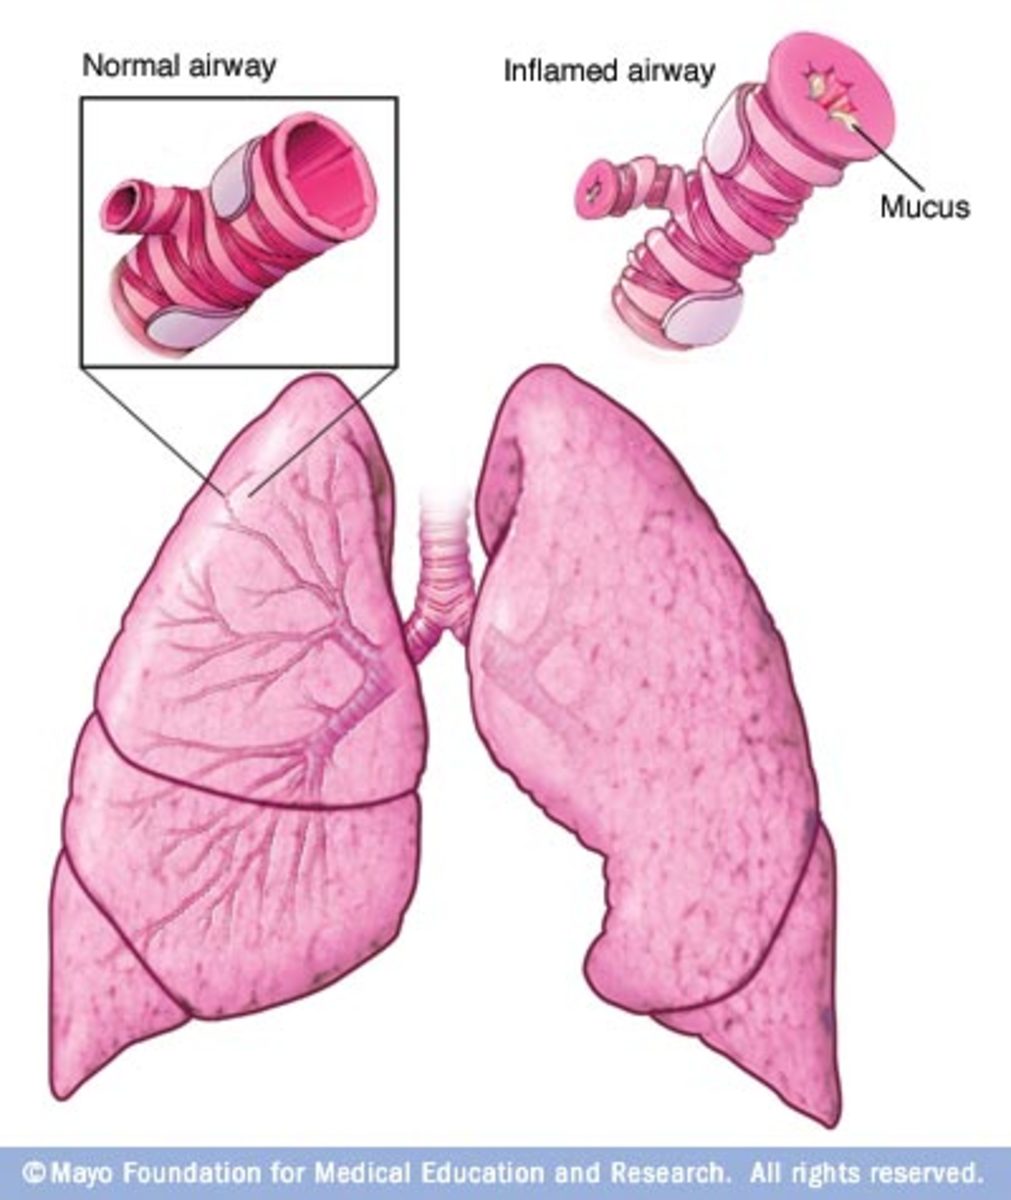 Asthma attack